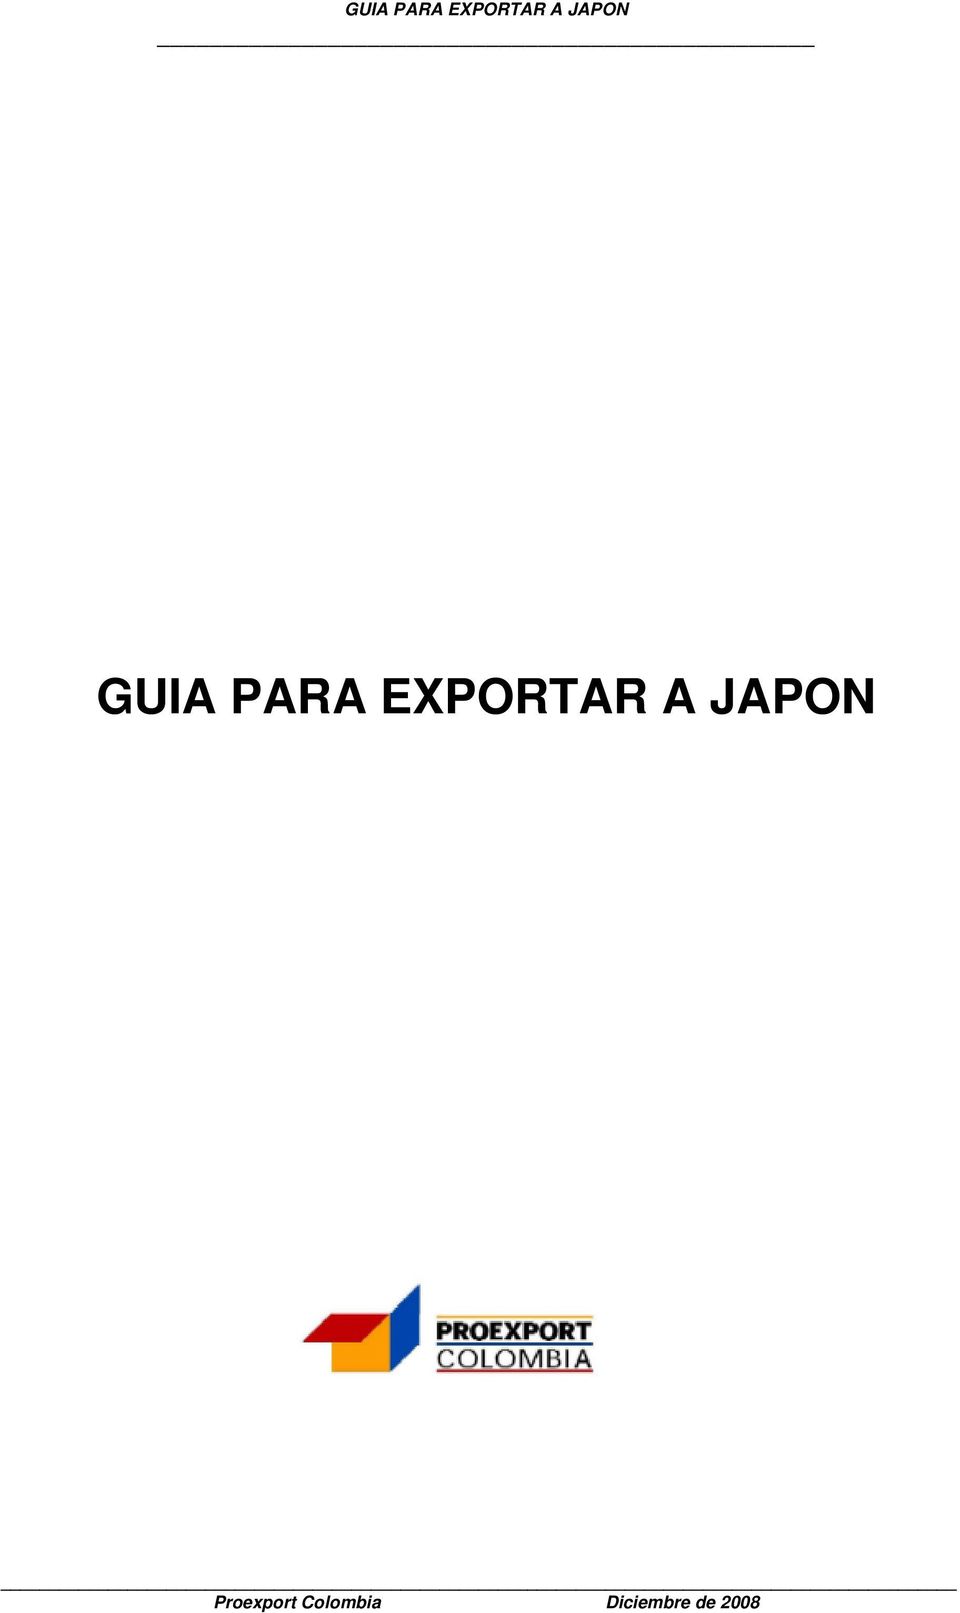 JAPON Proexport